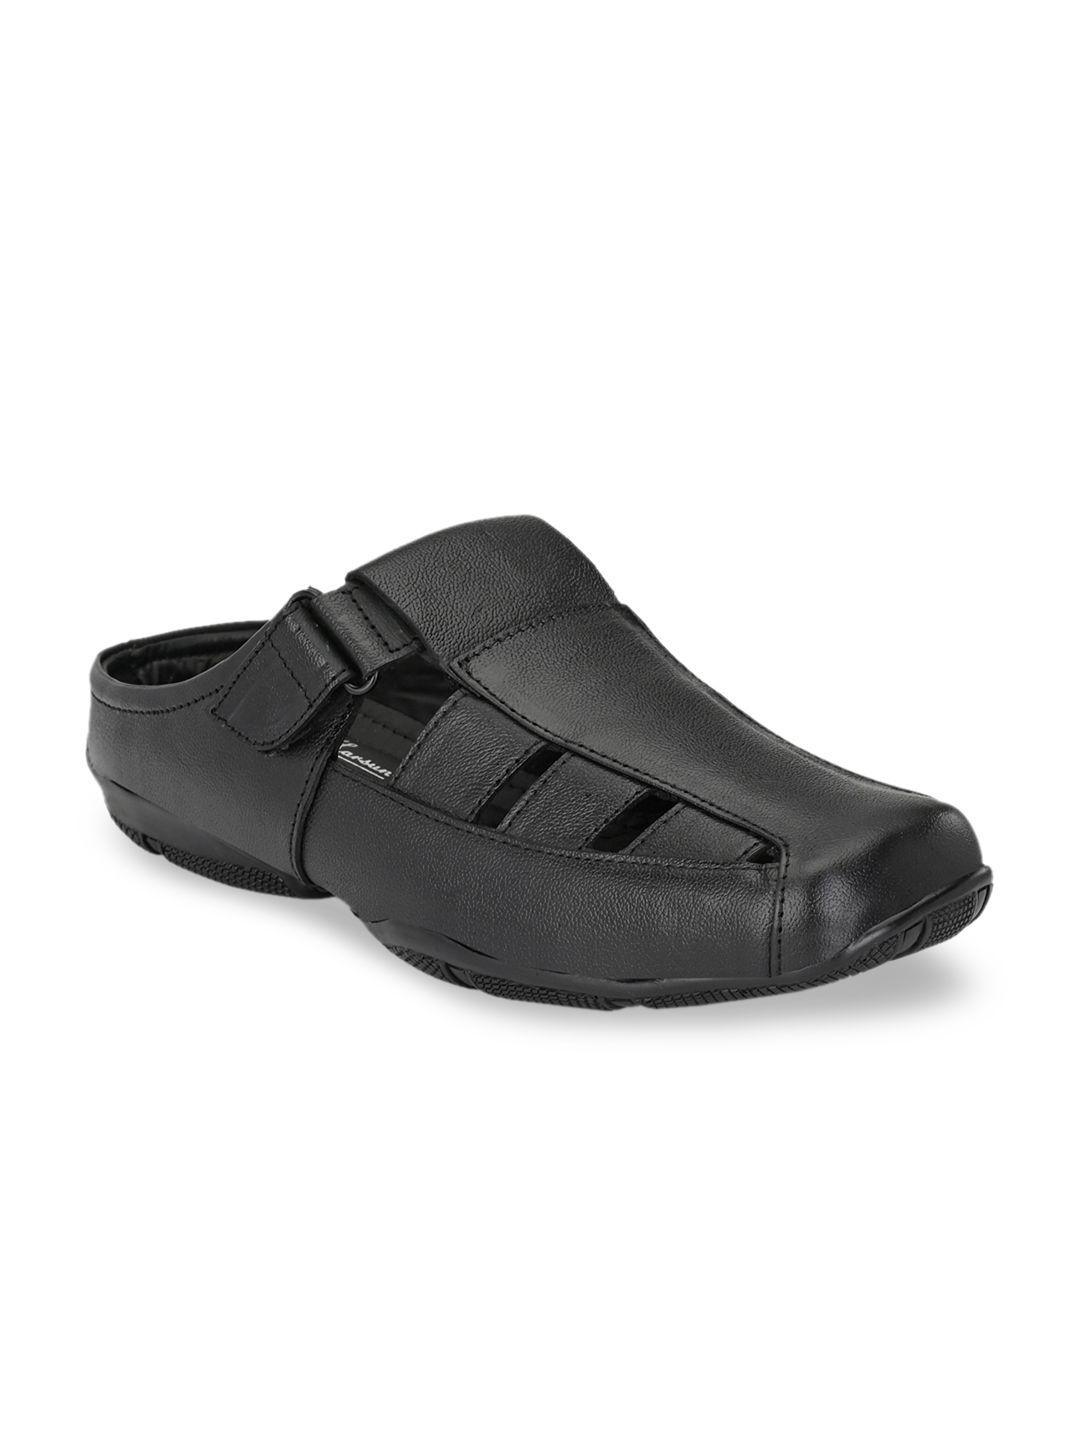 John Karsun Men Black Leather Sandals